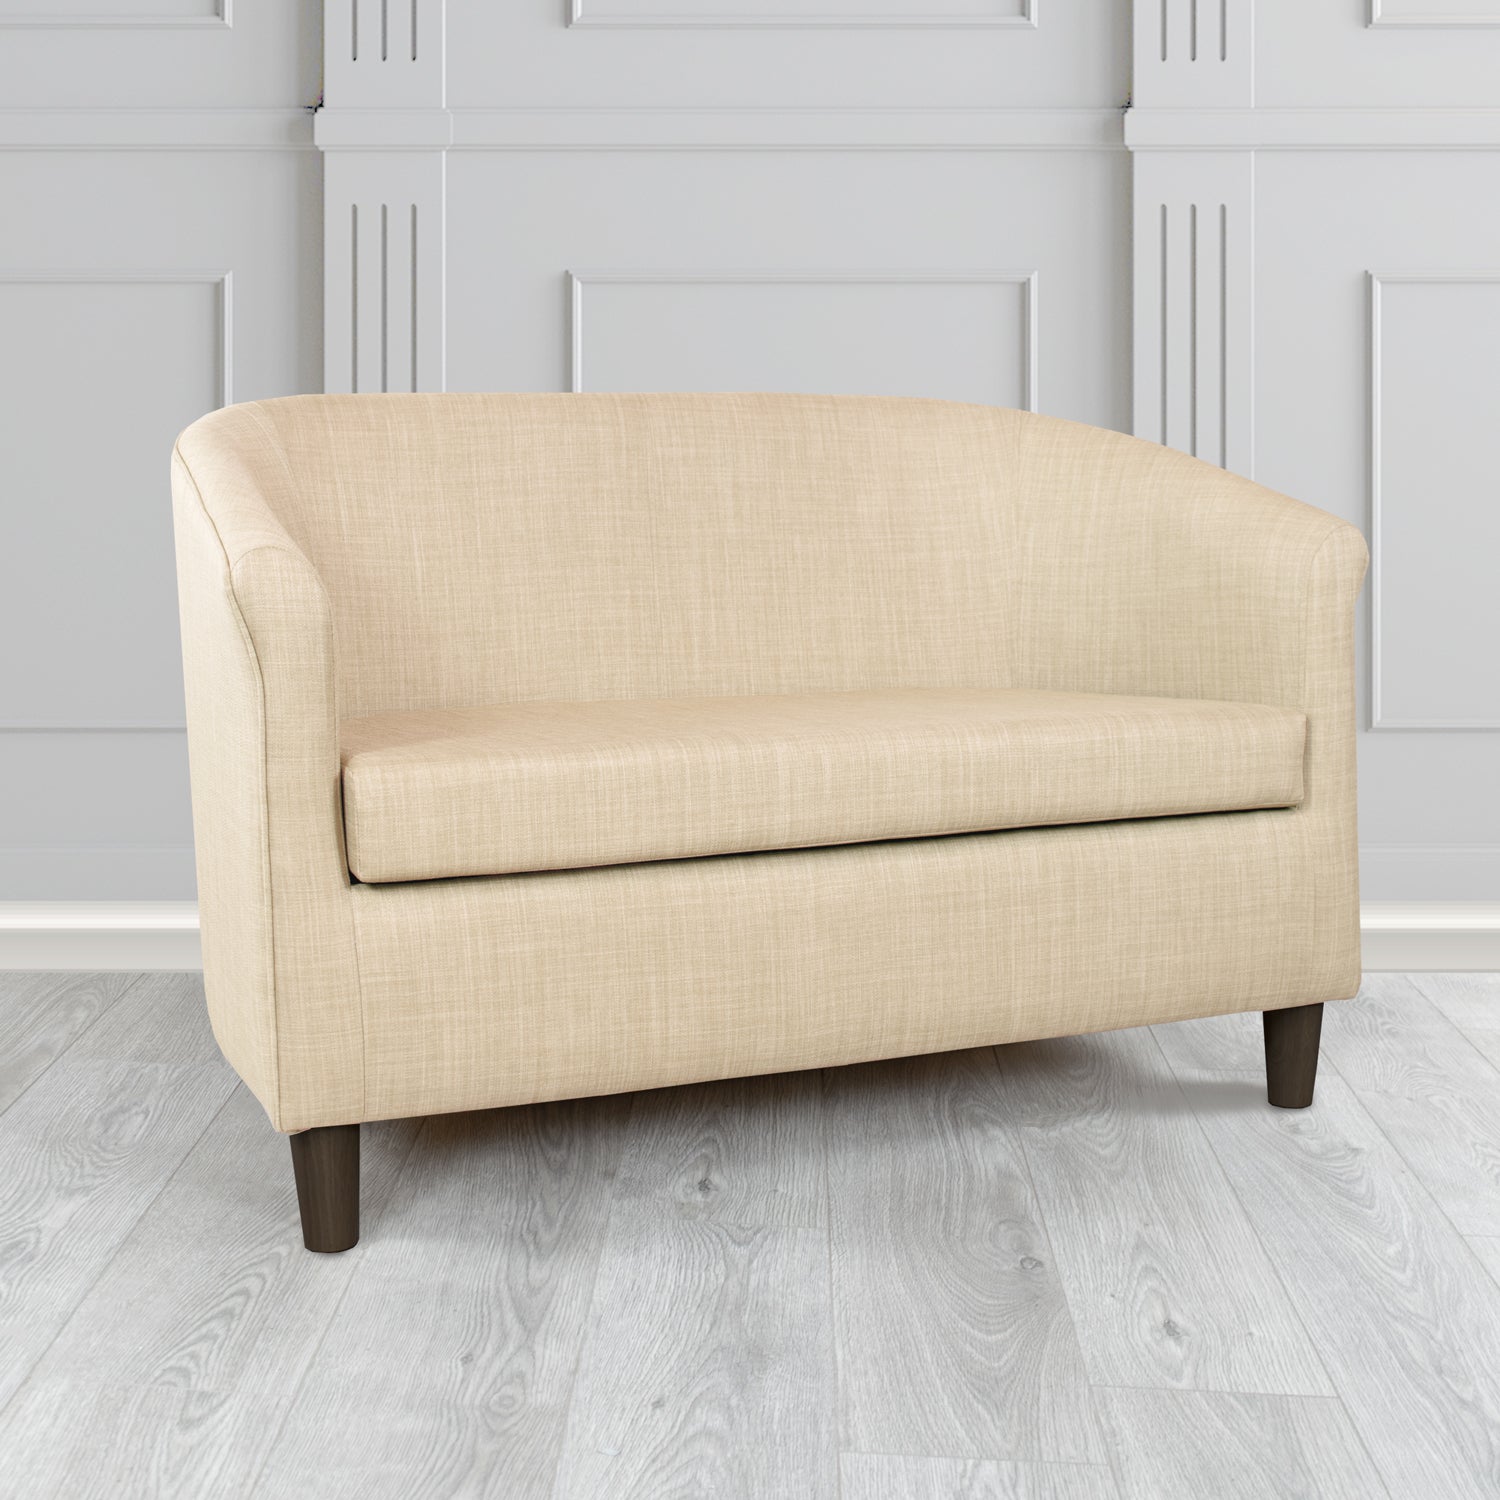 Tuscany Charles Pearl Plain Linen Fabric 2 Seater Tub Sofa - The Tub Chair Shop